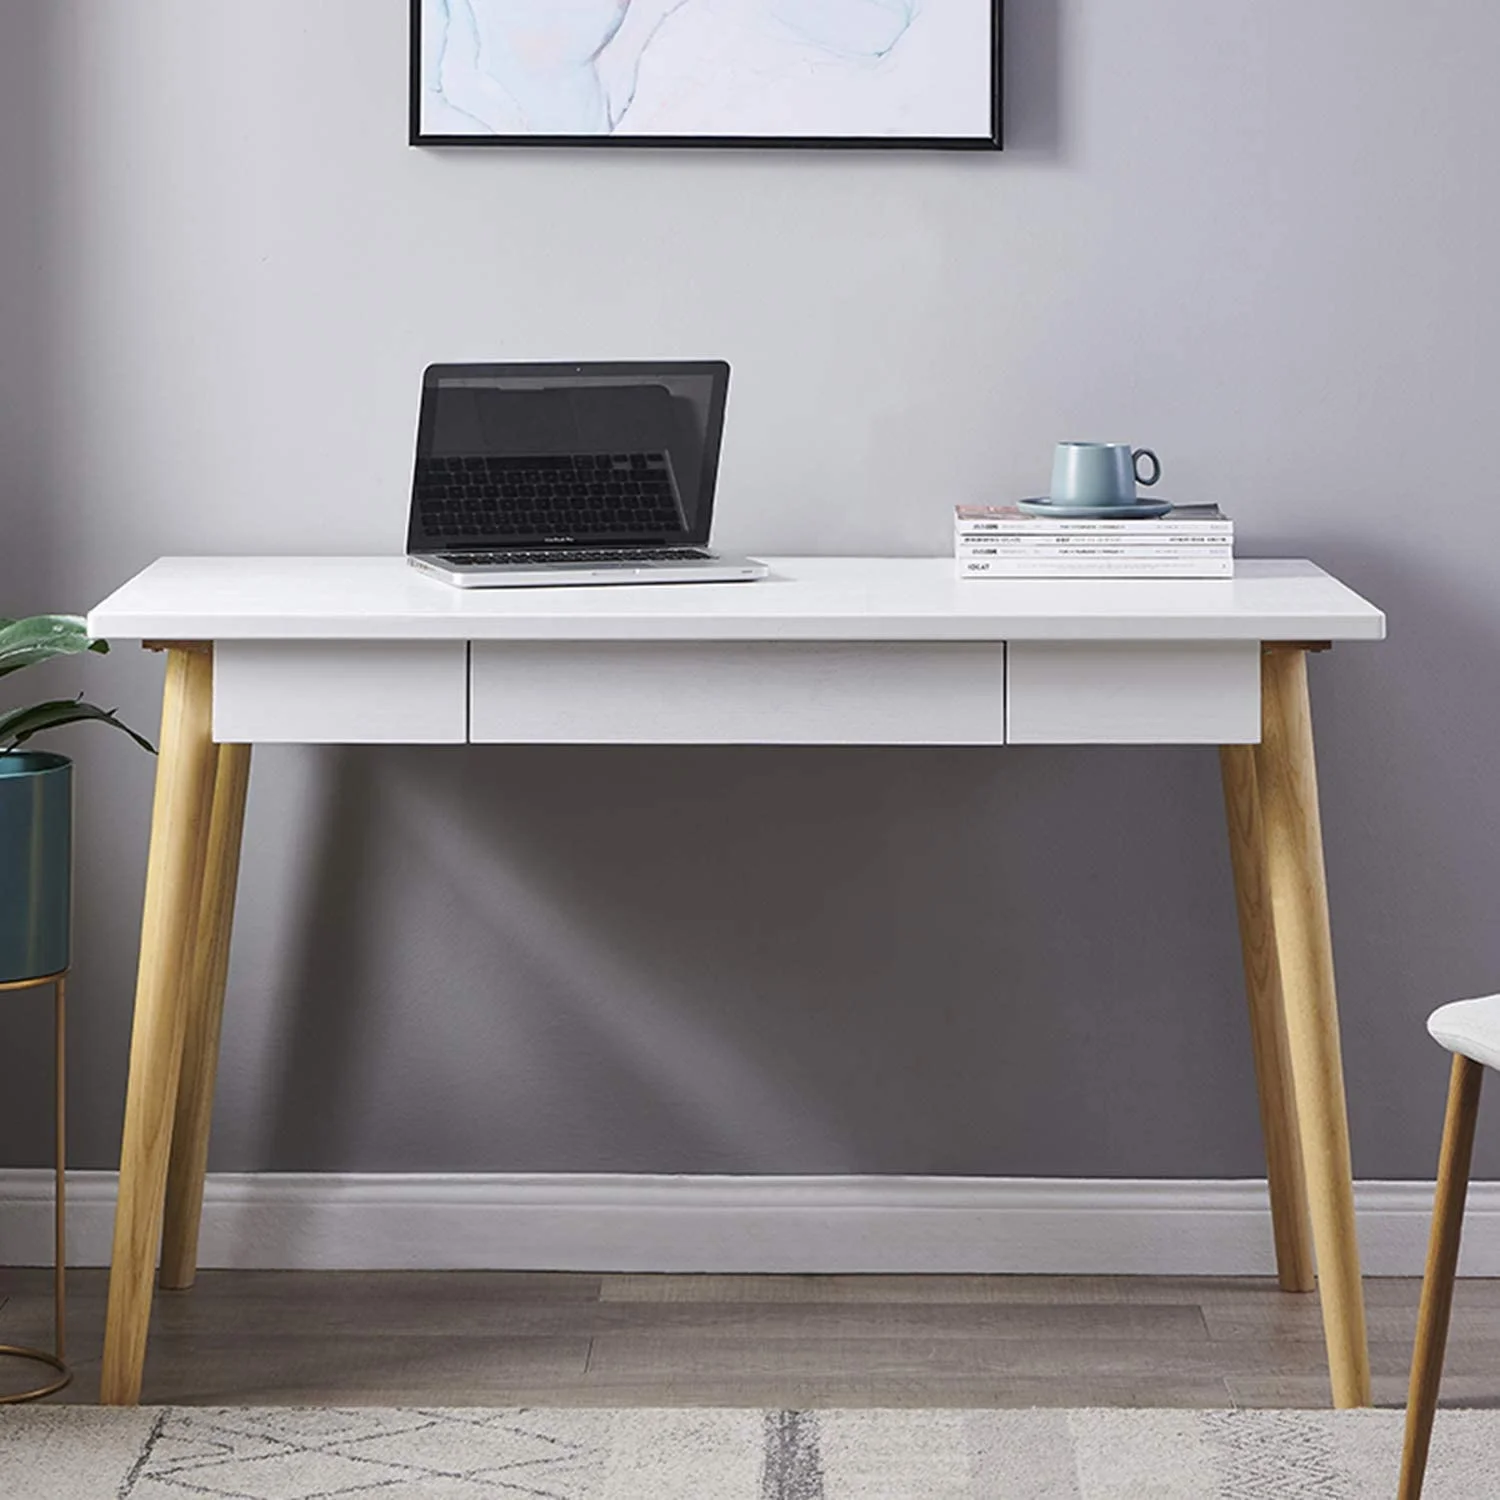 

Home Office Desk Large Computer Desk Study Desk Writing Table Workstation With Solid Wood Legs 1 Drawer Home Furniture Desks